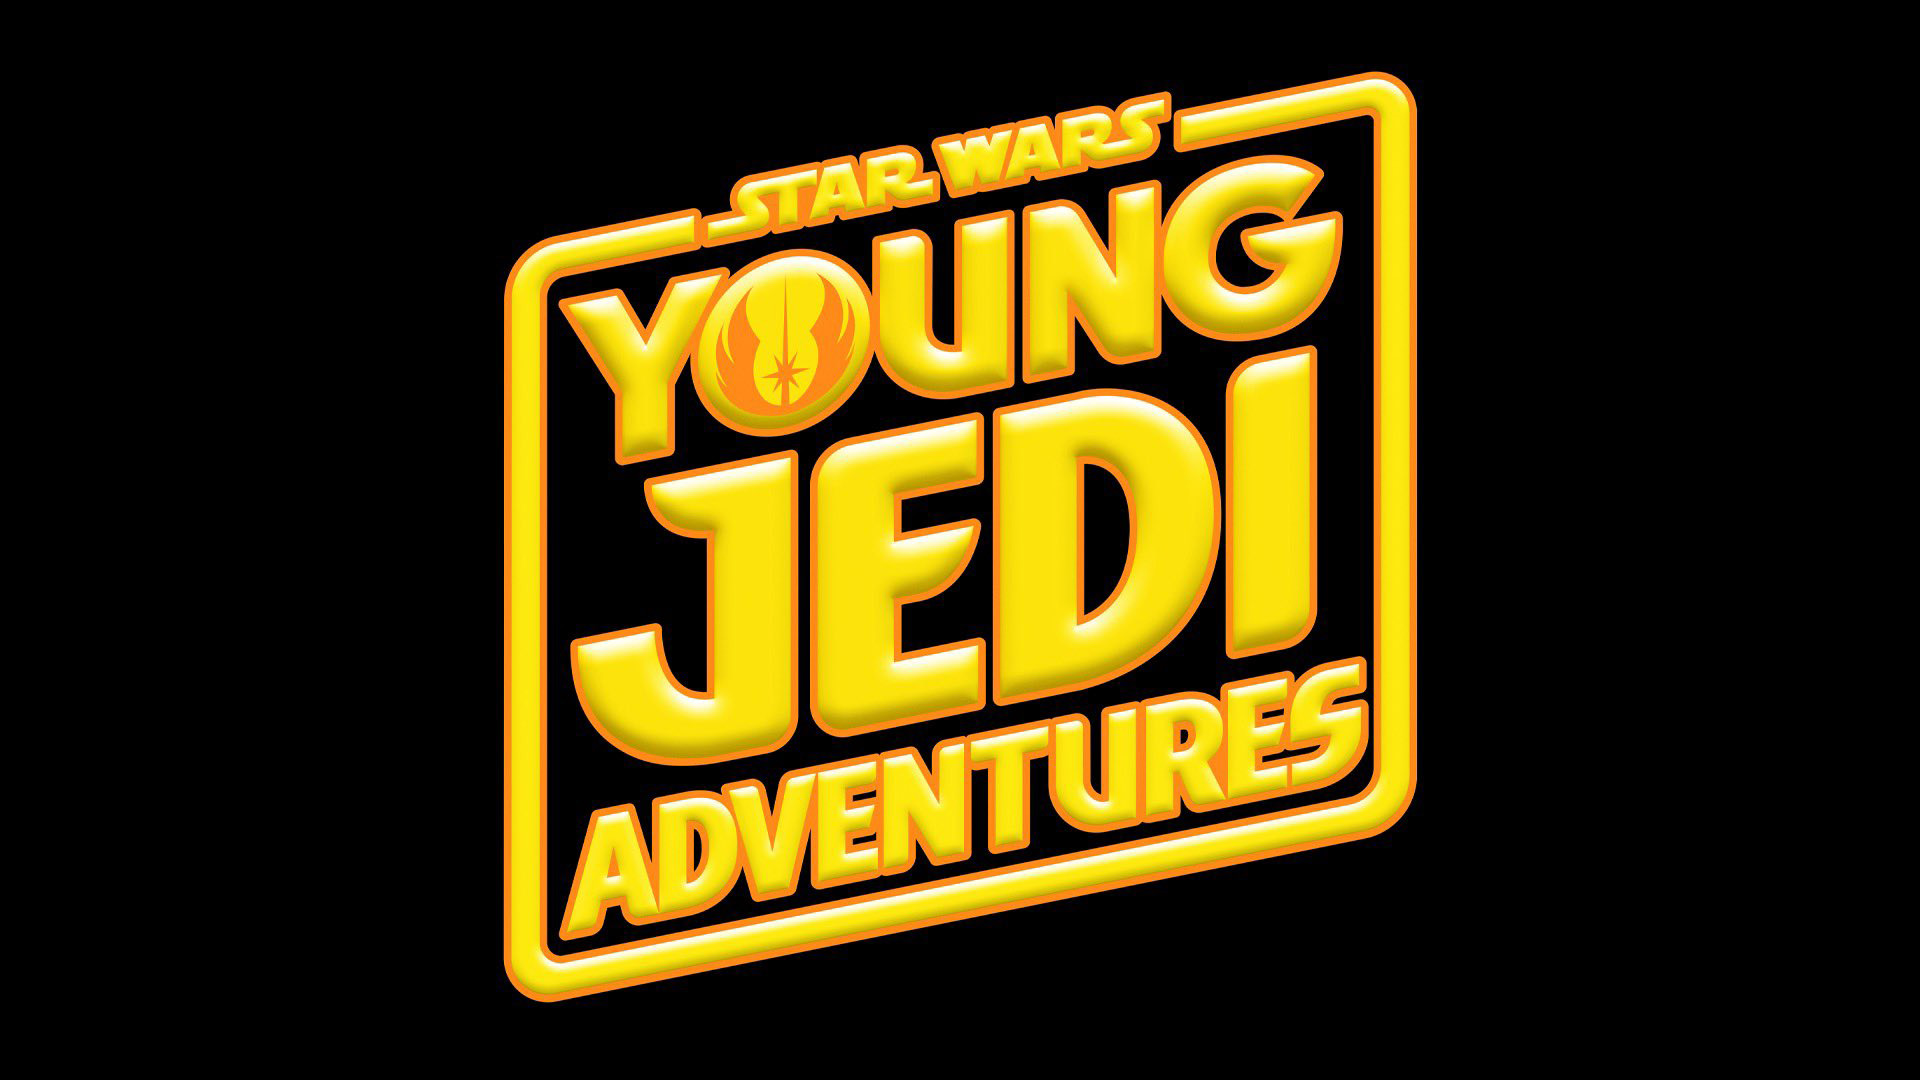 Star Wars: Young Jedi Adventures logo